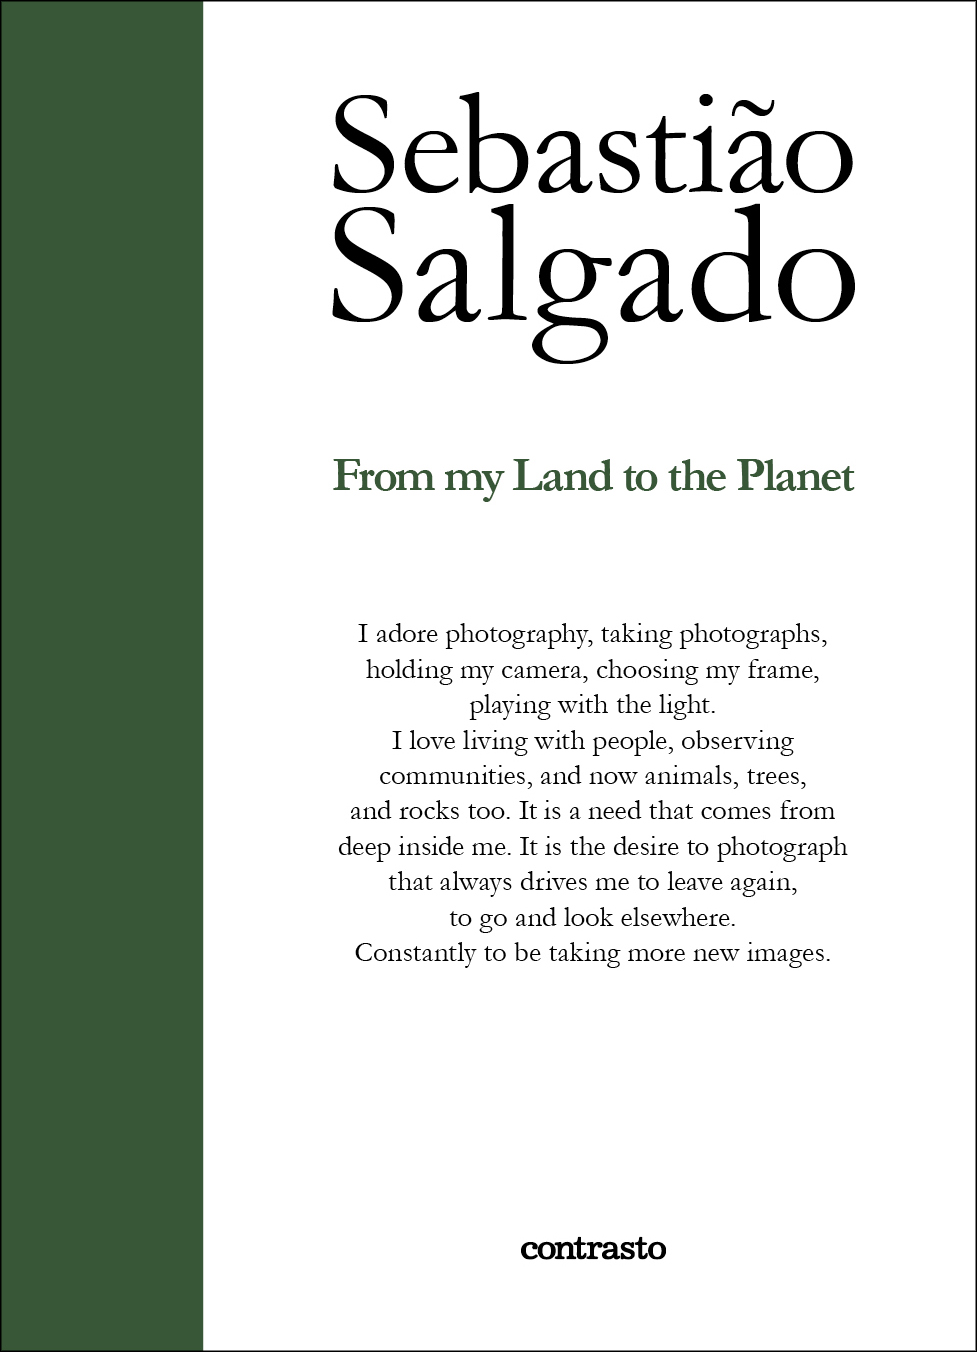 Sebastiao_salgado_from_my_land_to_the_planet